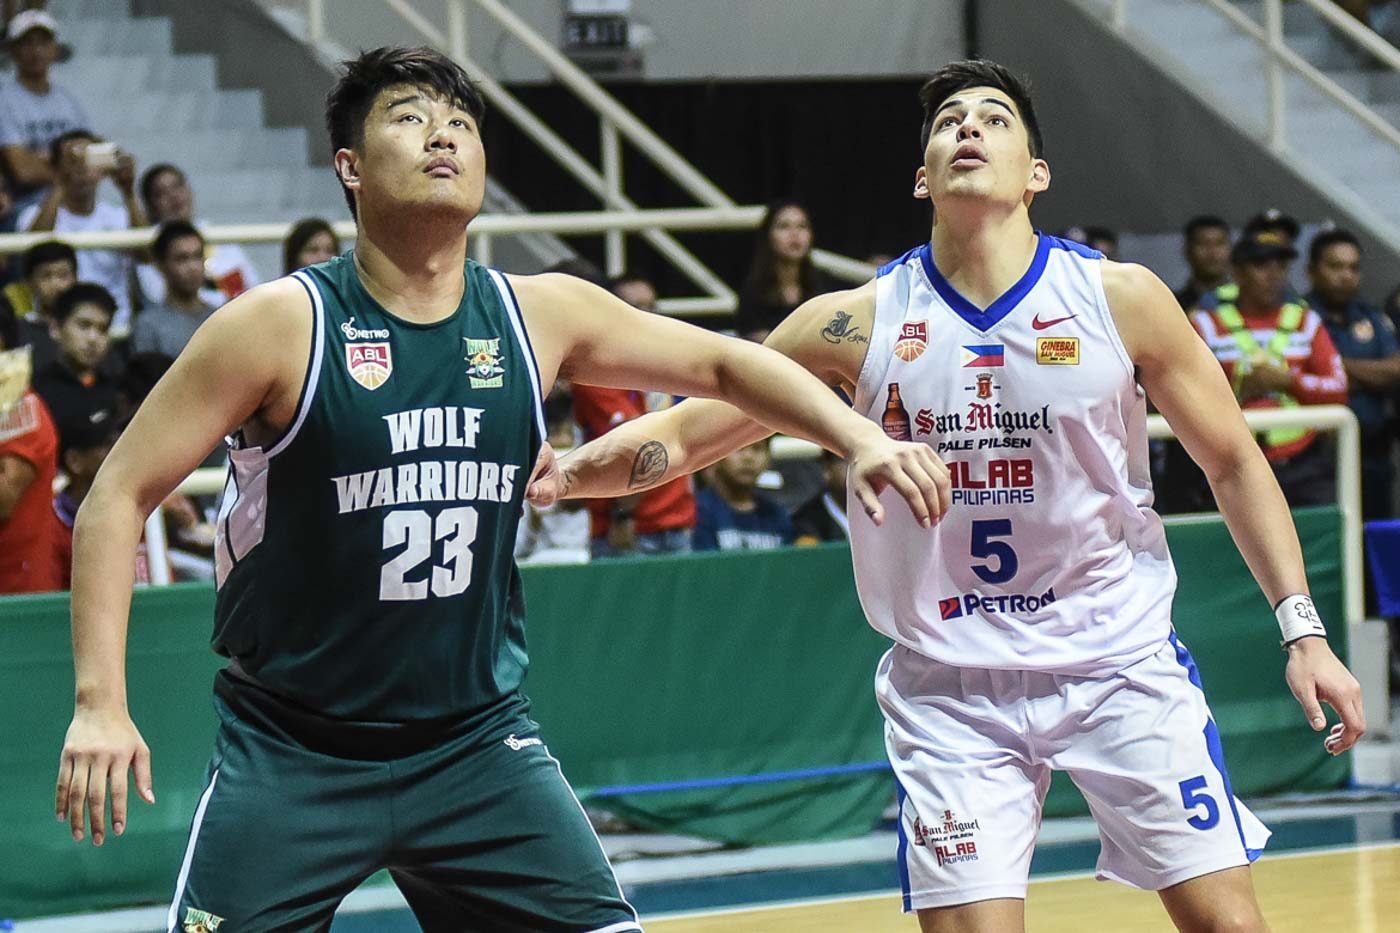 Playoff-bound Alab Pilipinas dominates Zhuhai anew